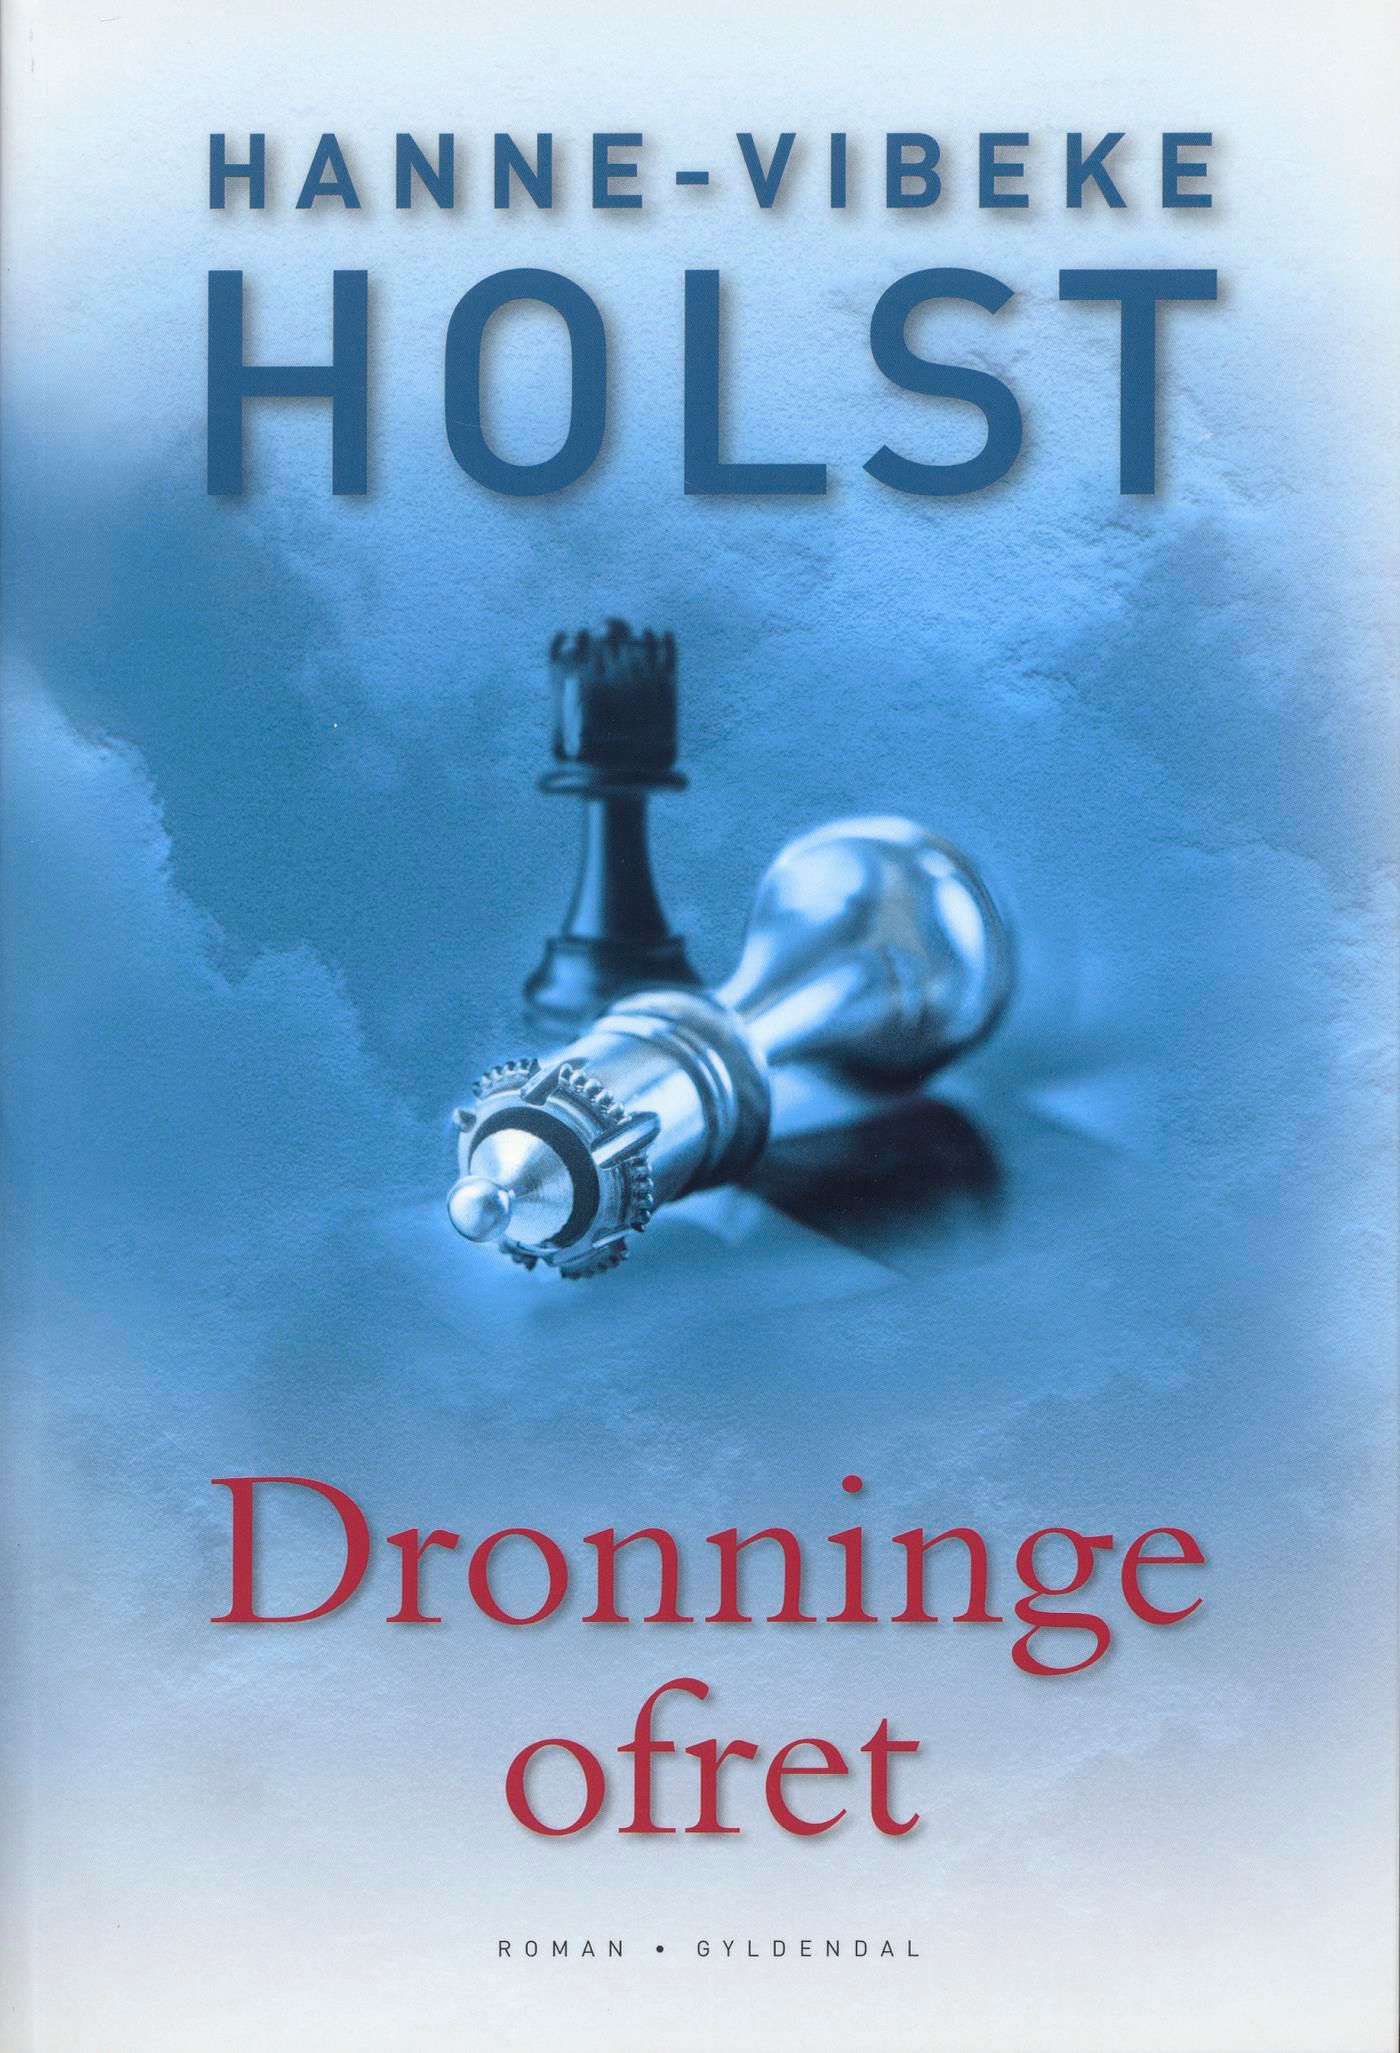 Dronningeofret, eBook by Hanne-Vibeke Holst